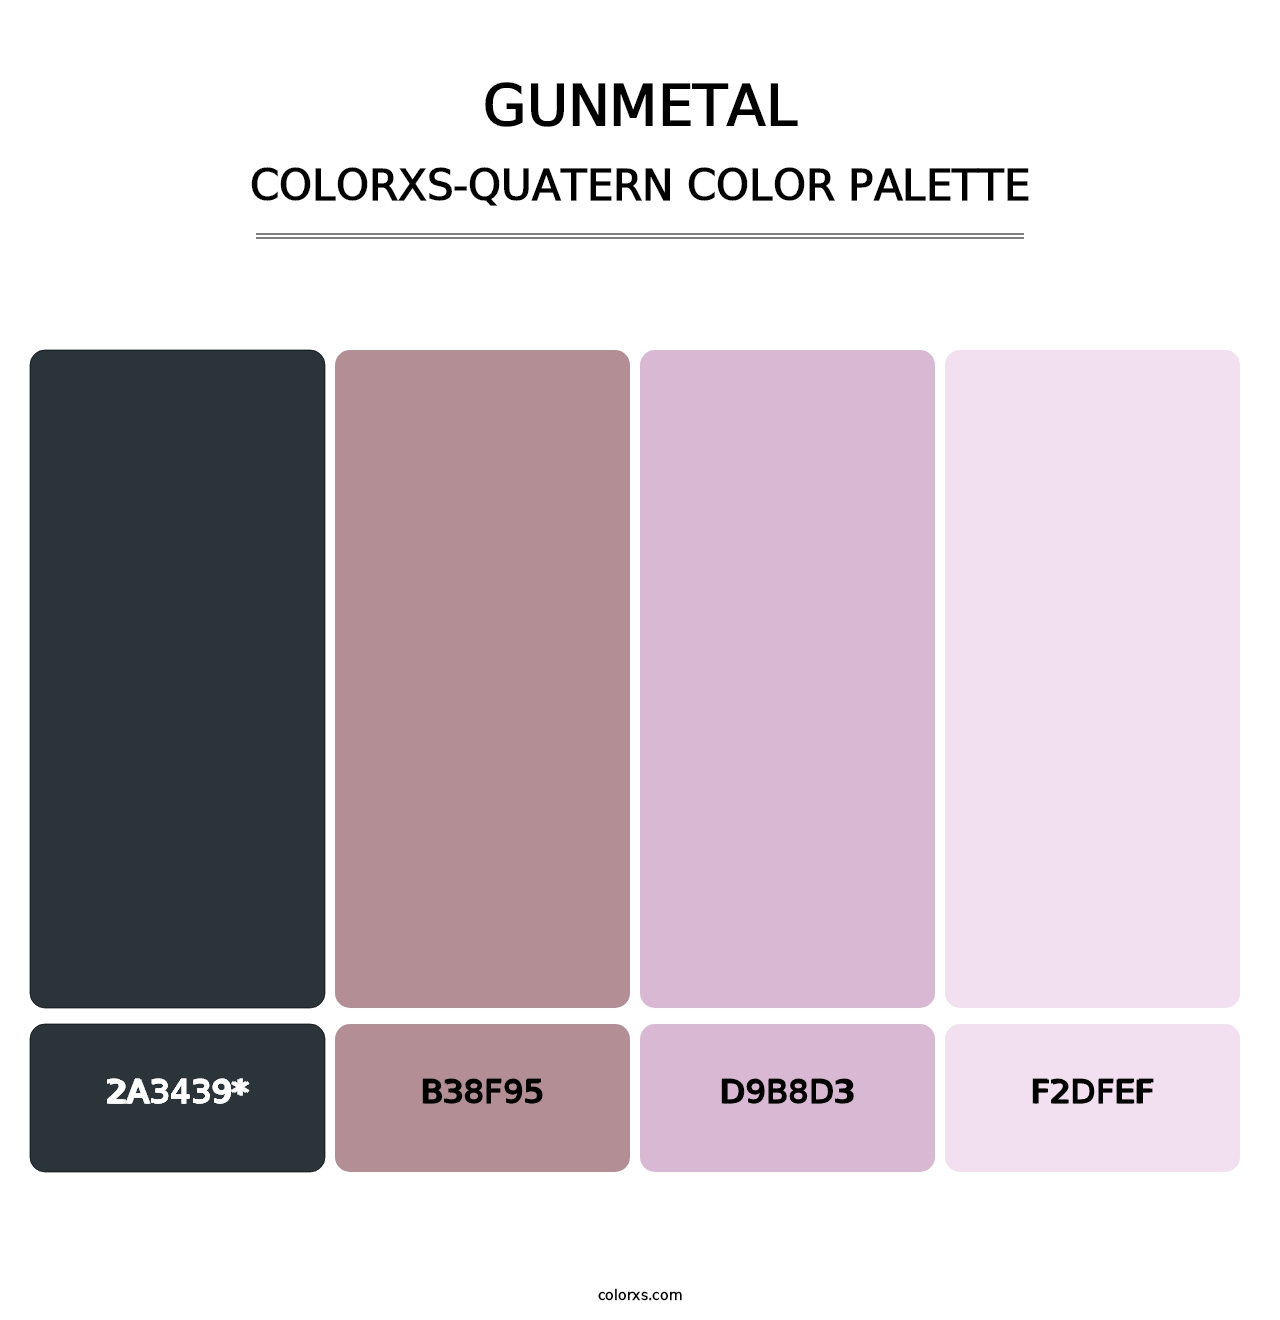 Gunmetal - Colorxs Quatern Palette